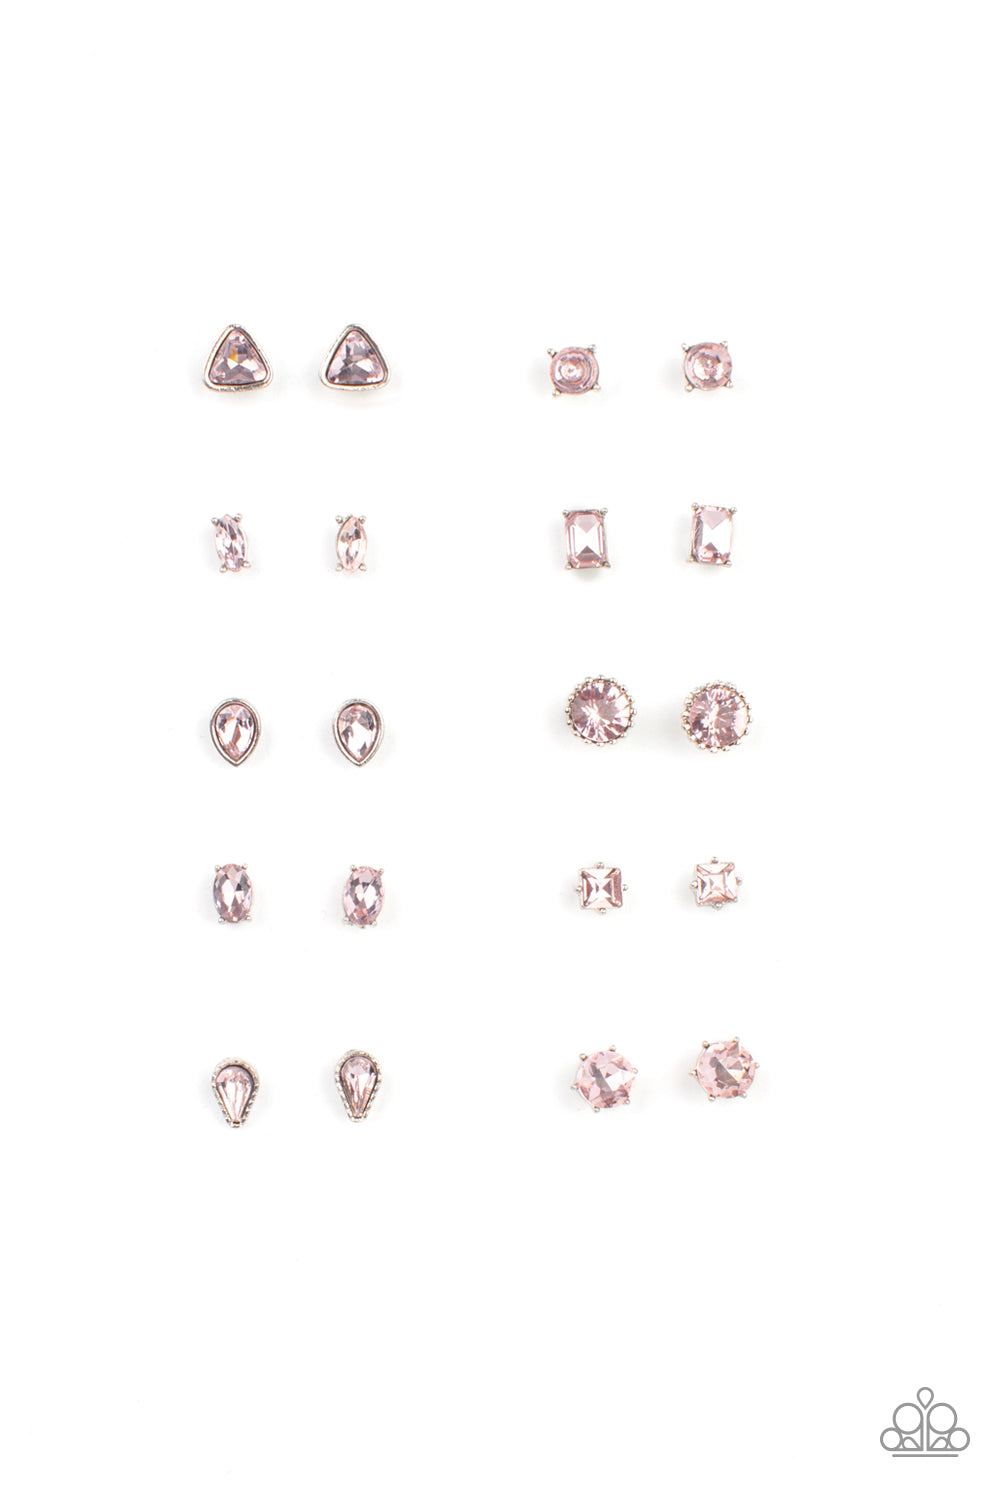 Starlet Shimmer Kid Jewelry Pink Diamond Multi-Shaped Earrings - 10 Pack